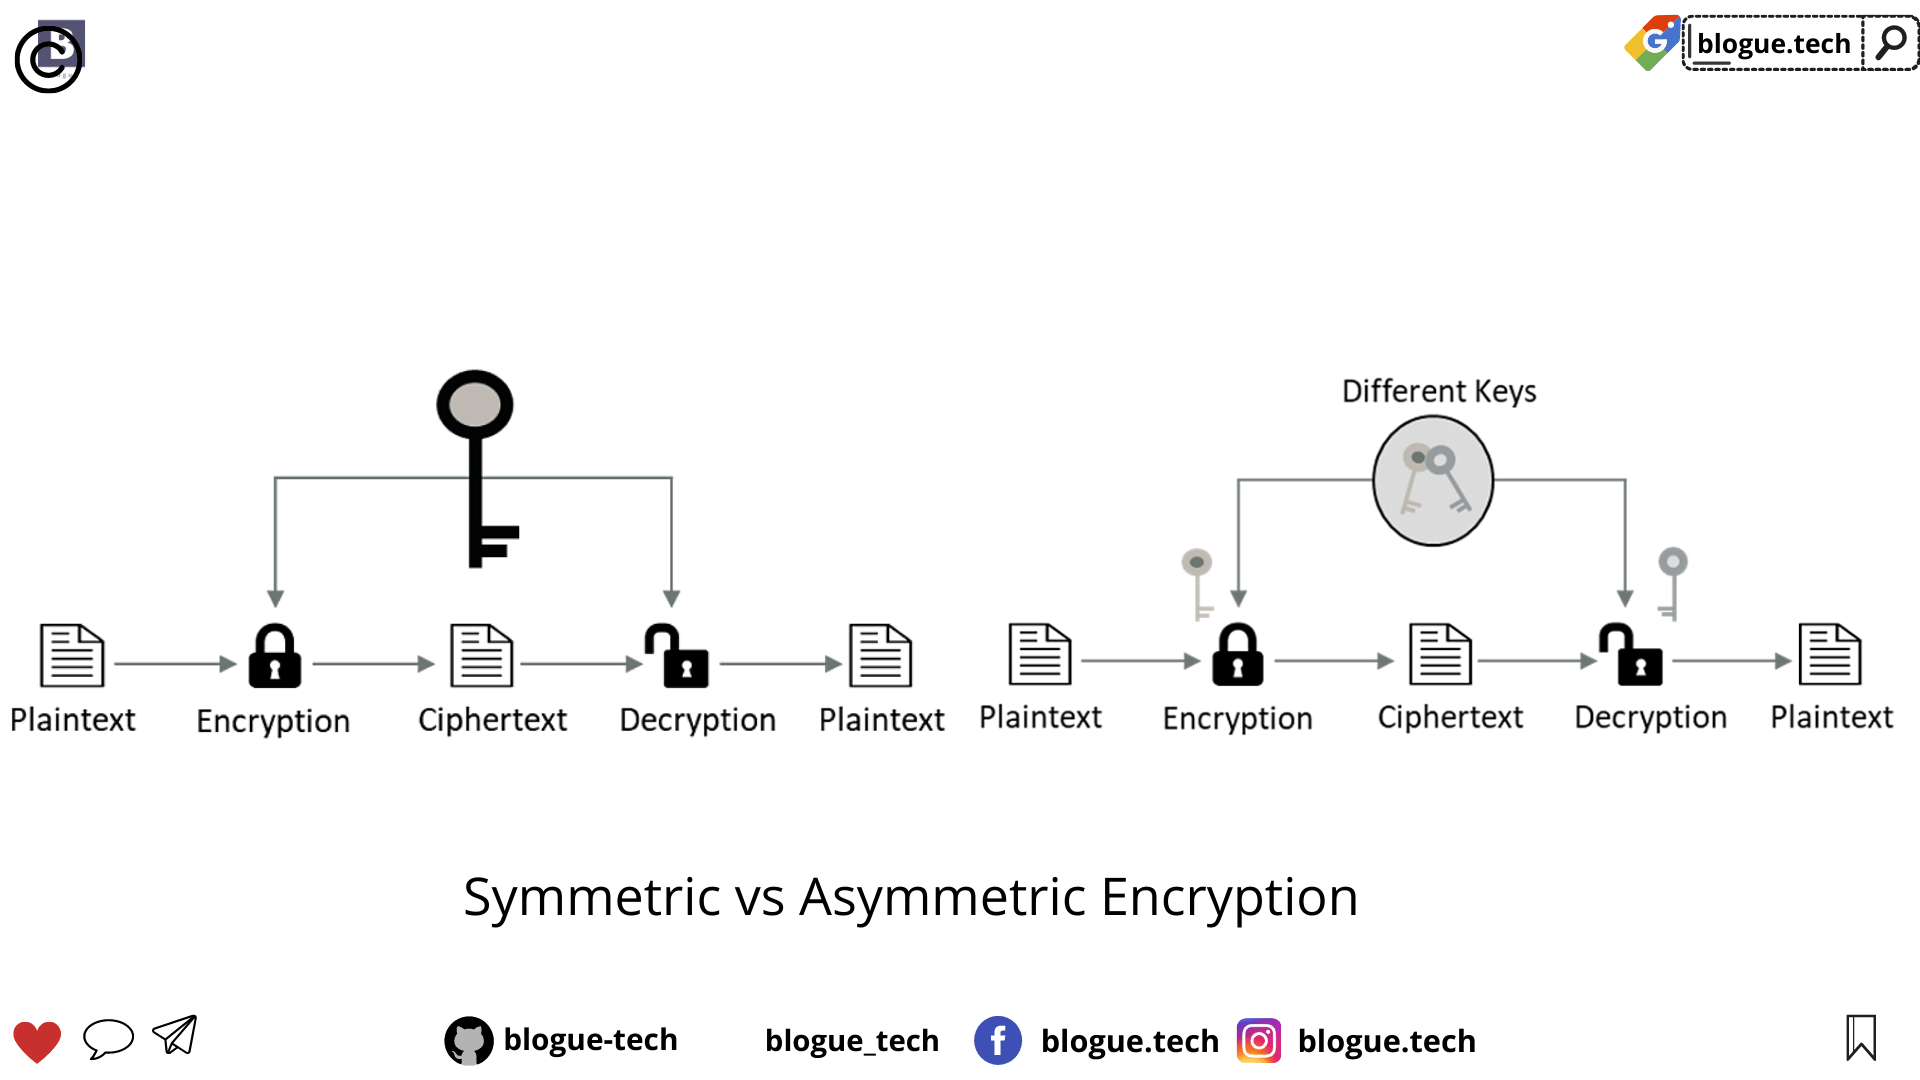 Symmetric vs Asymmetric Encryption